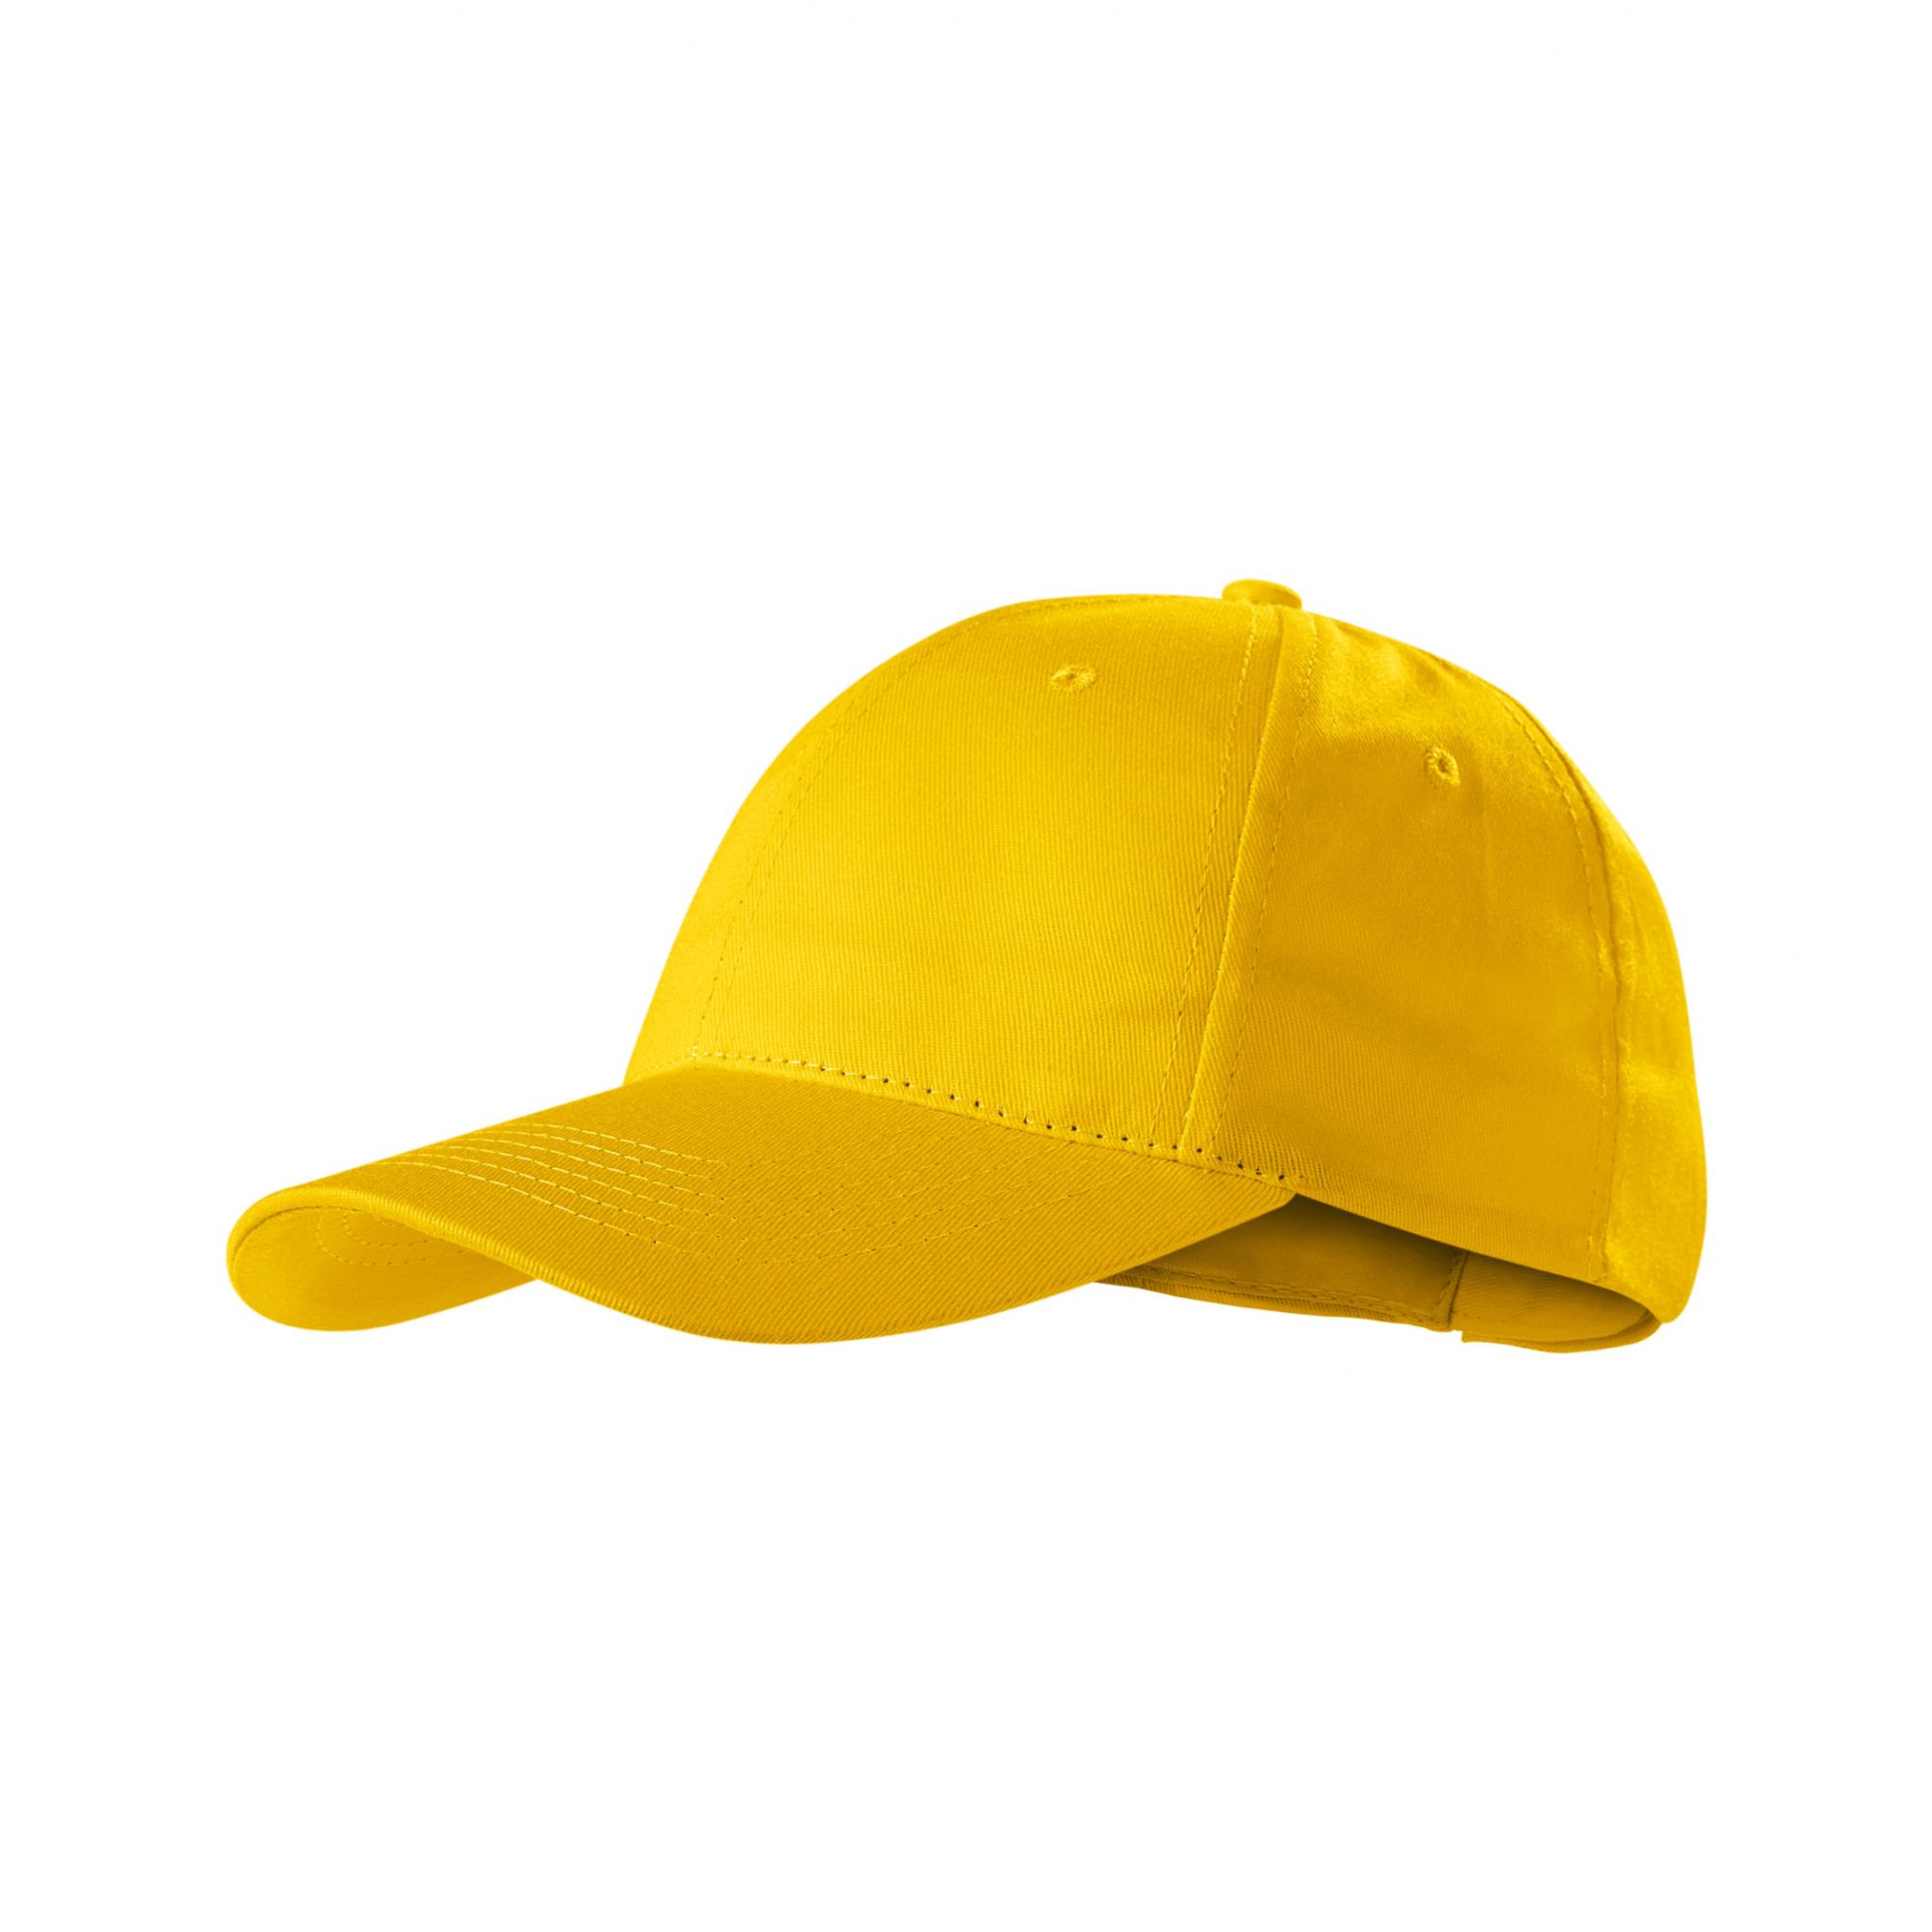 Şapcă unisex Sunshine P31 Galben